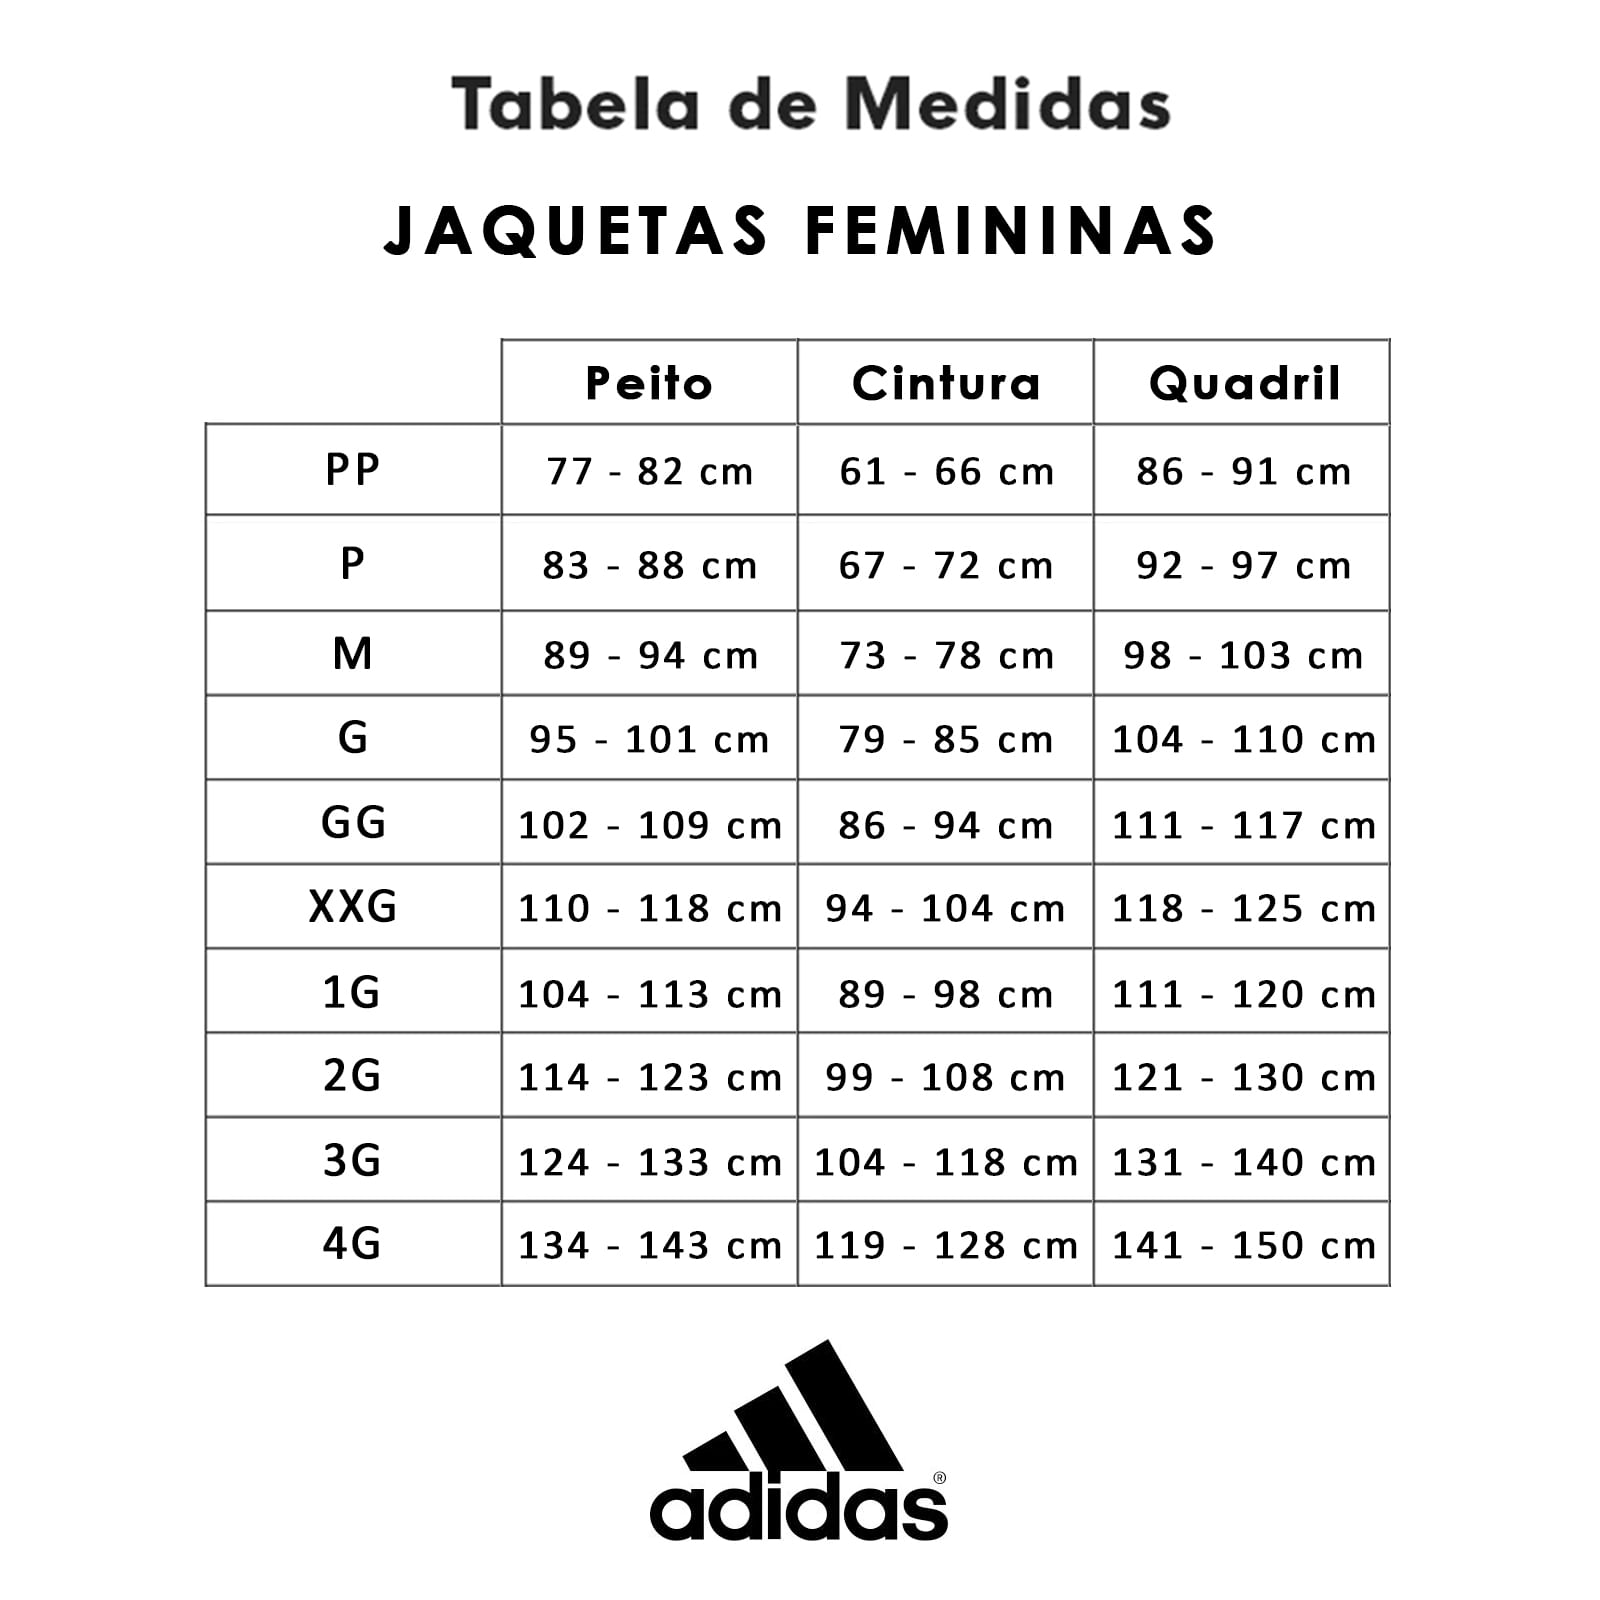 Jaqueta Feminina Sst Tt - Adidas Originals - Vermelho - Shop2gether